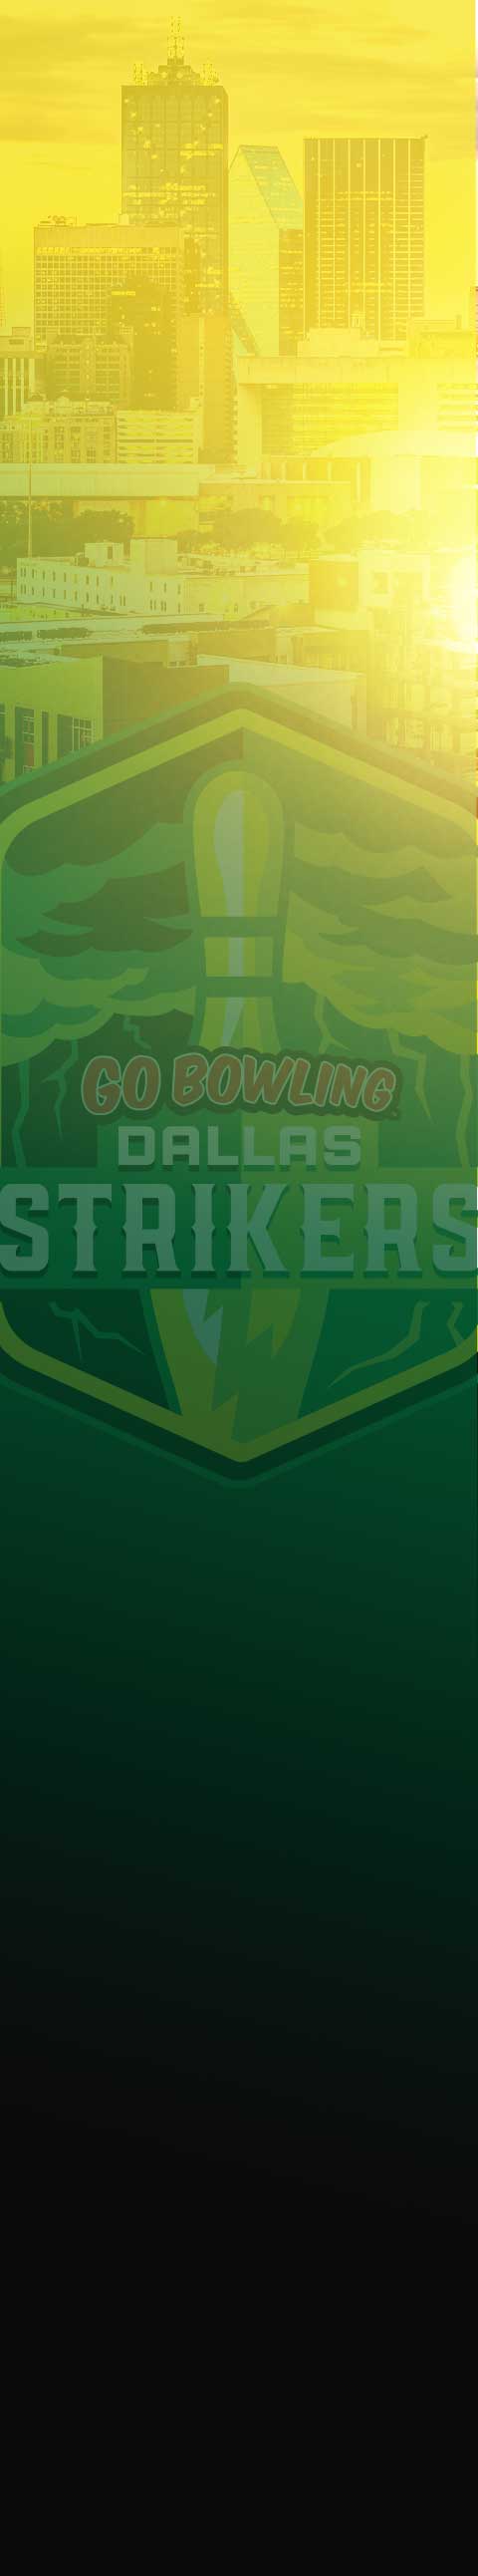 PBA League - Go Bowling! Dallas Strikers